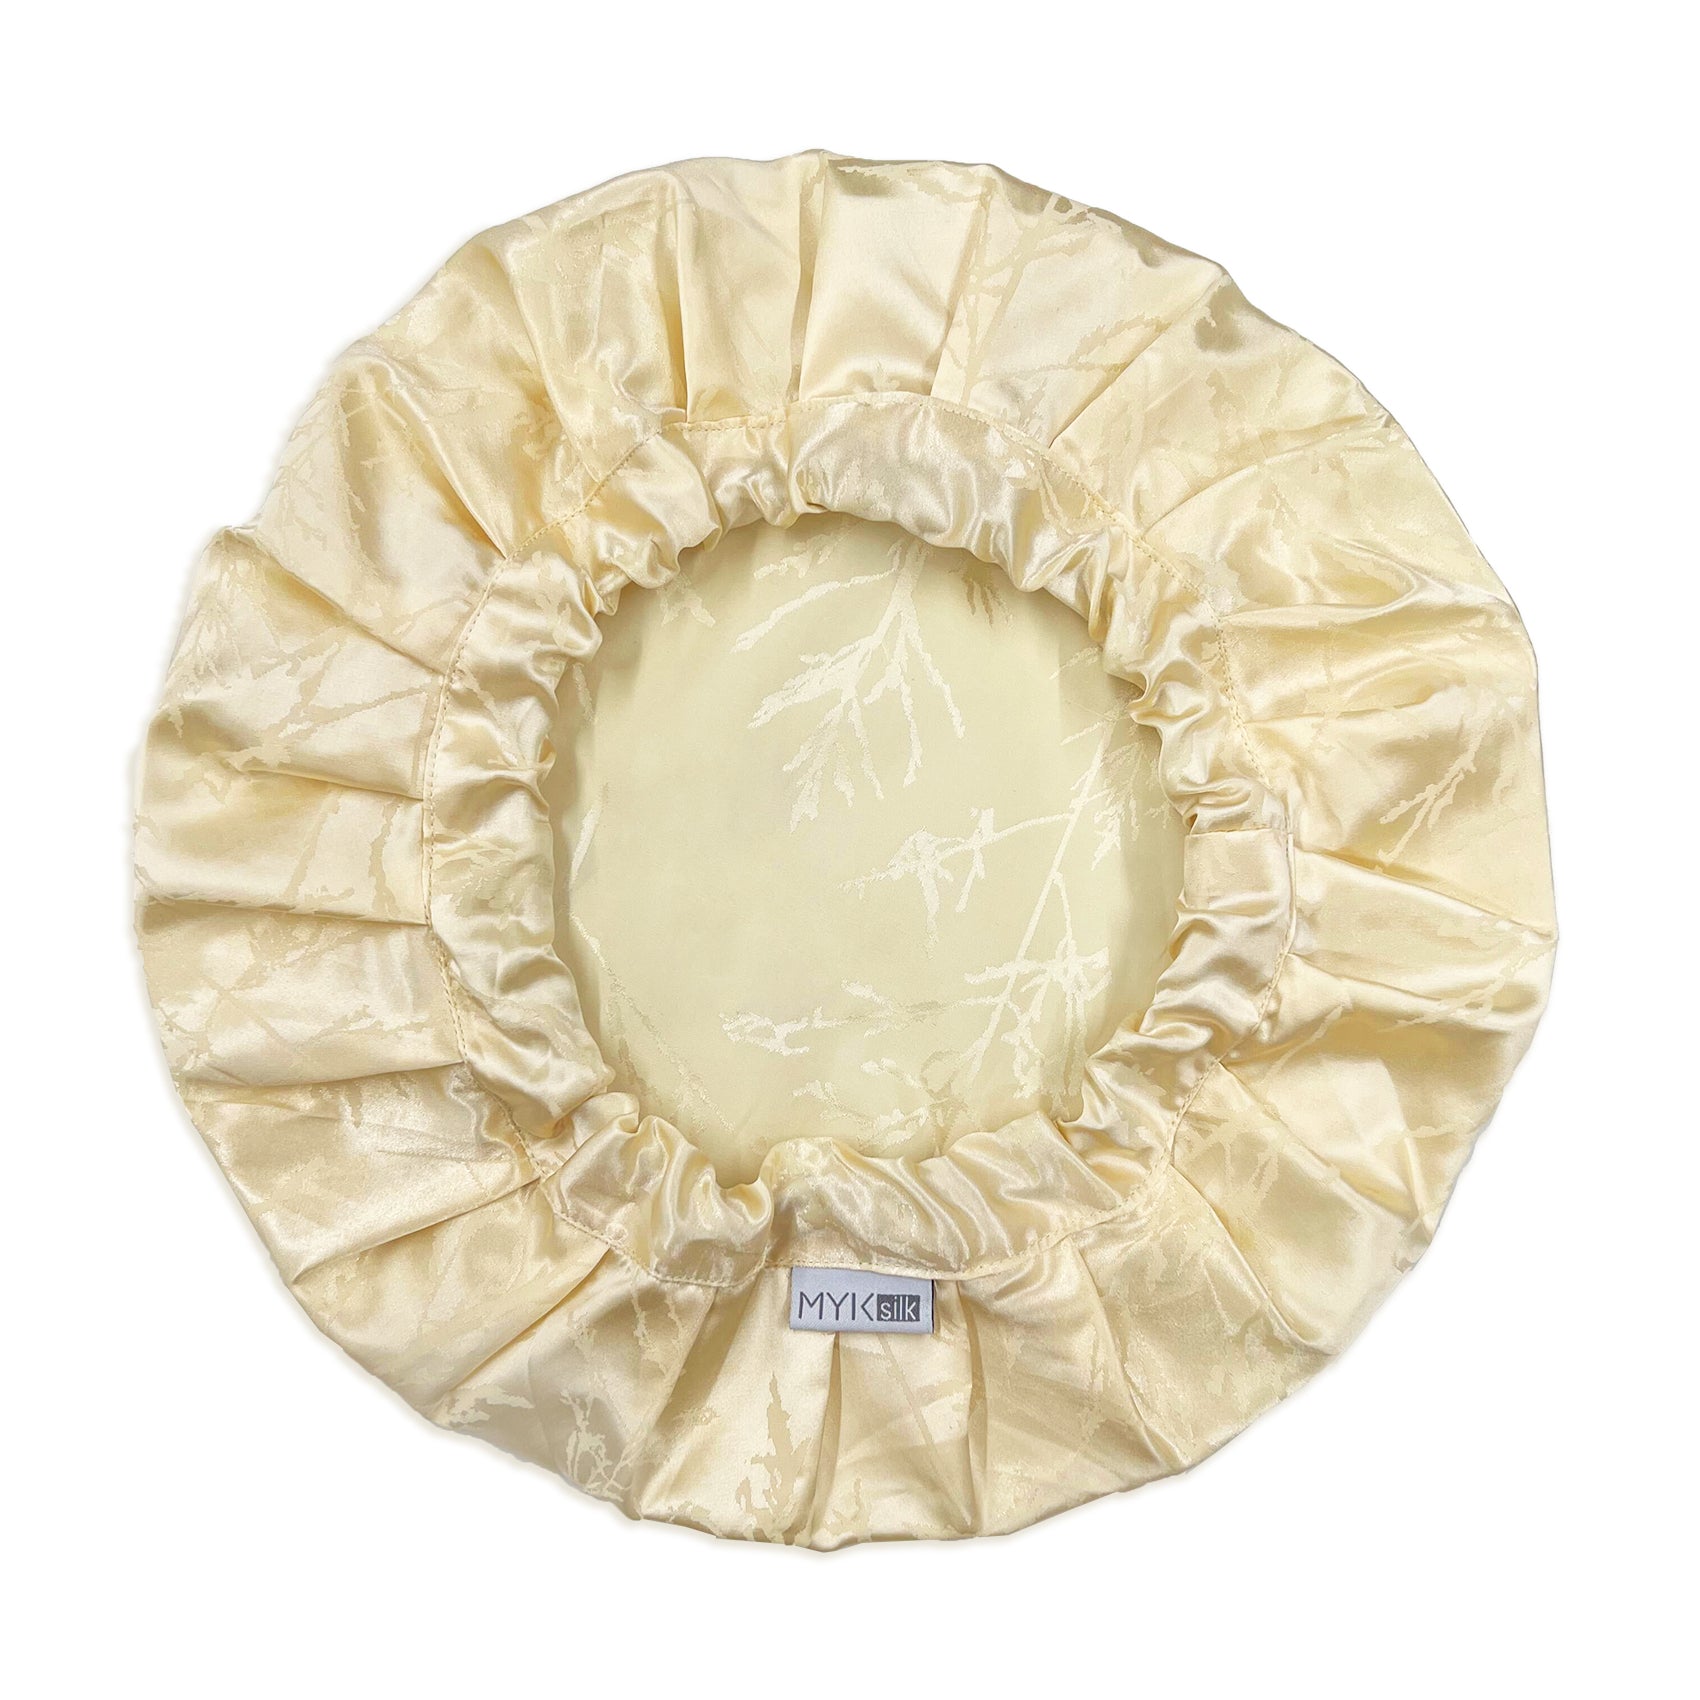 Silk Night Sleeping Cap Bonnet with Comfort Elastic Band - MYK Silk #color_champagne prints